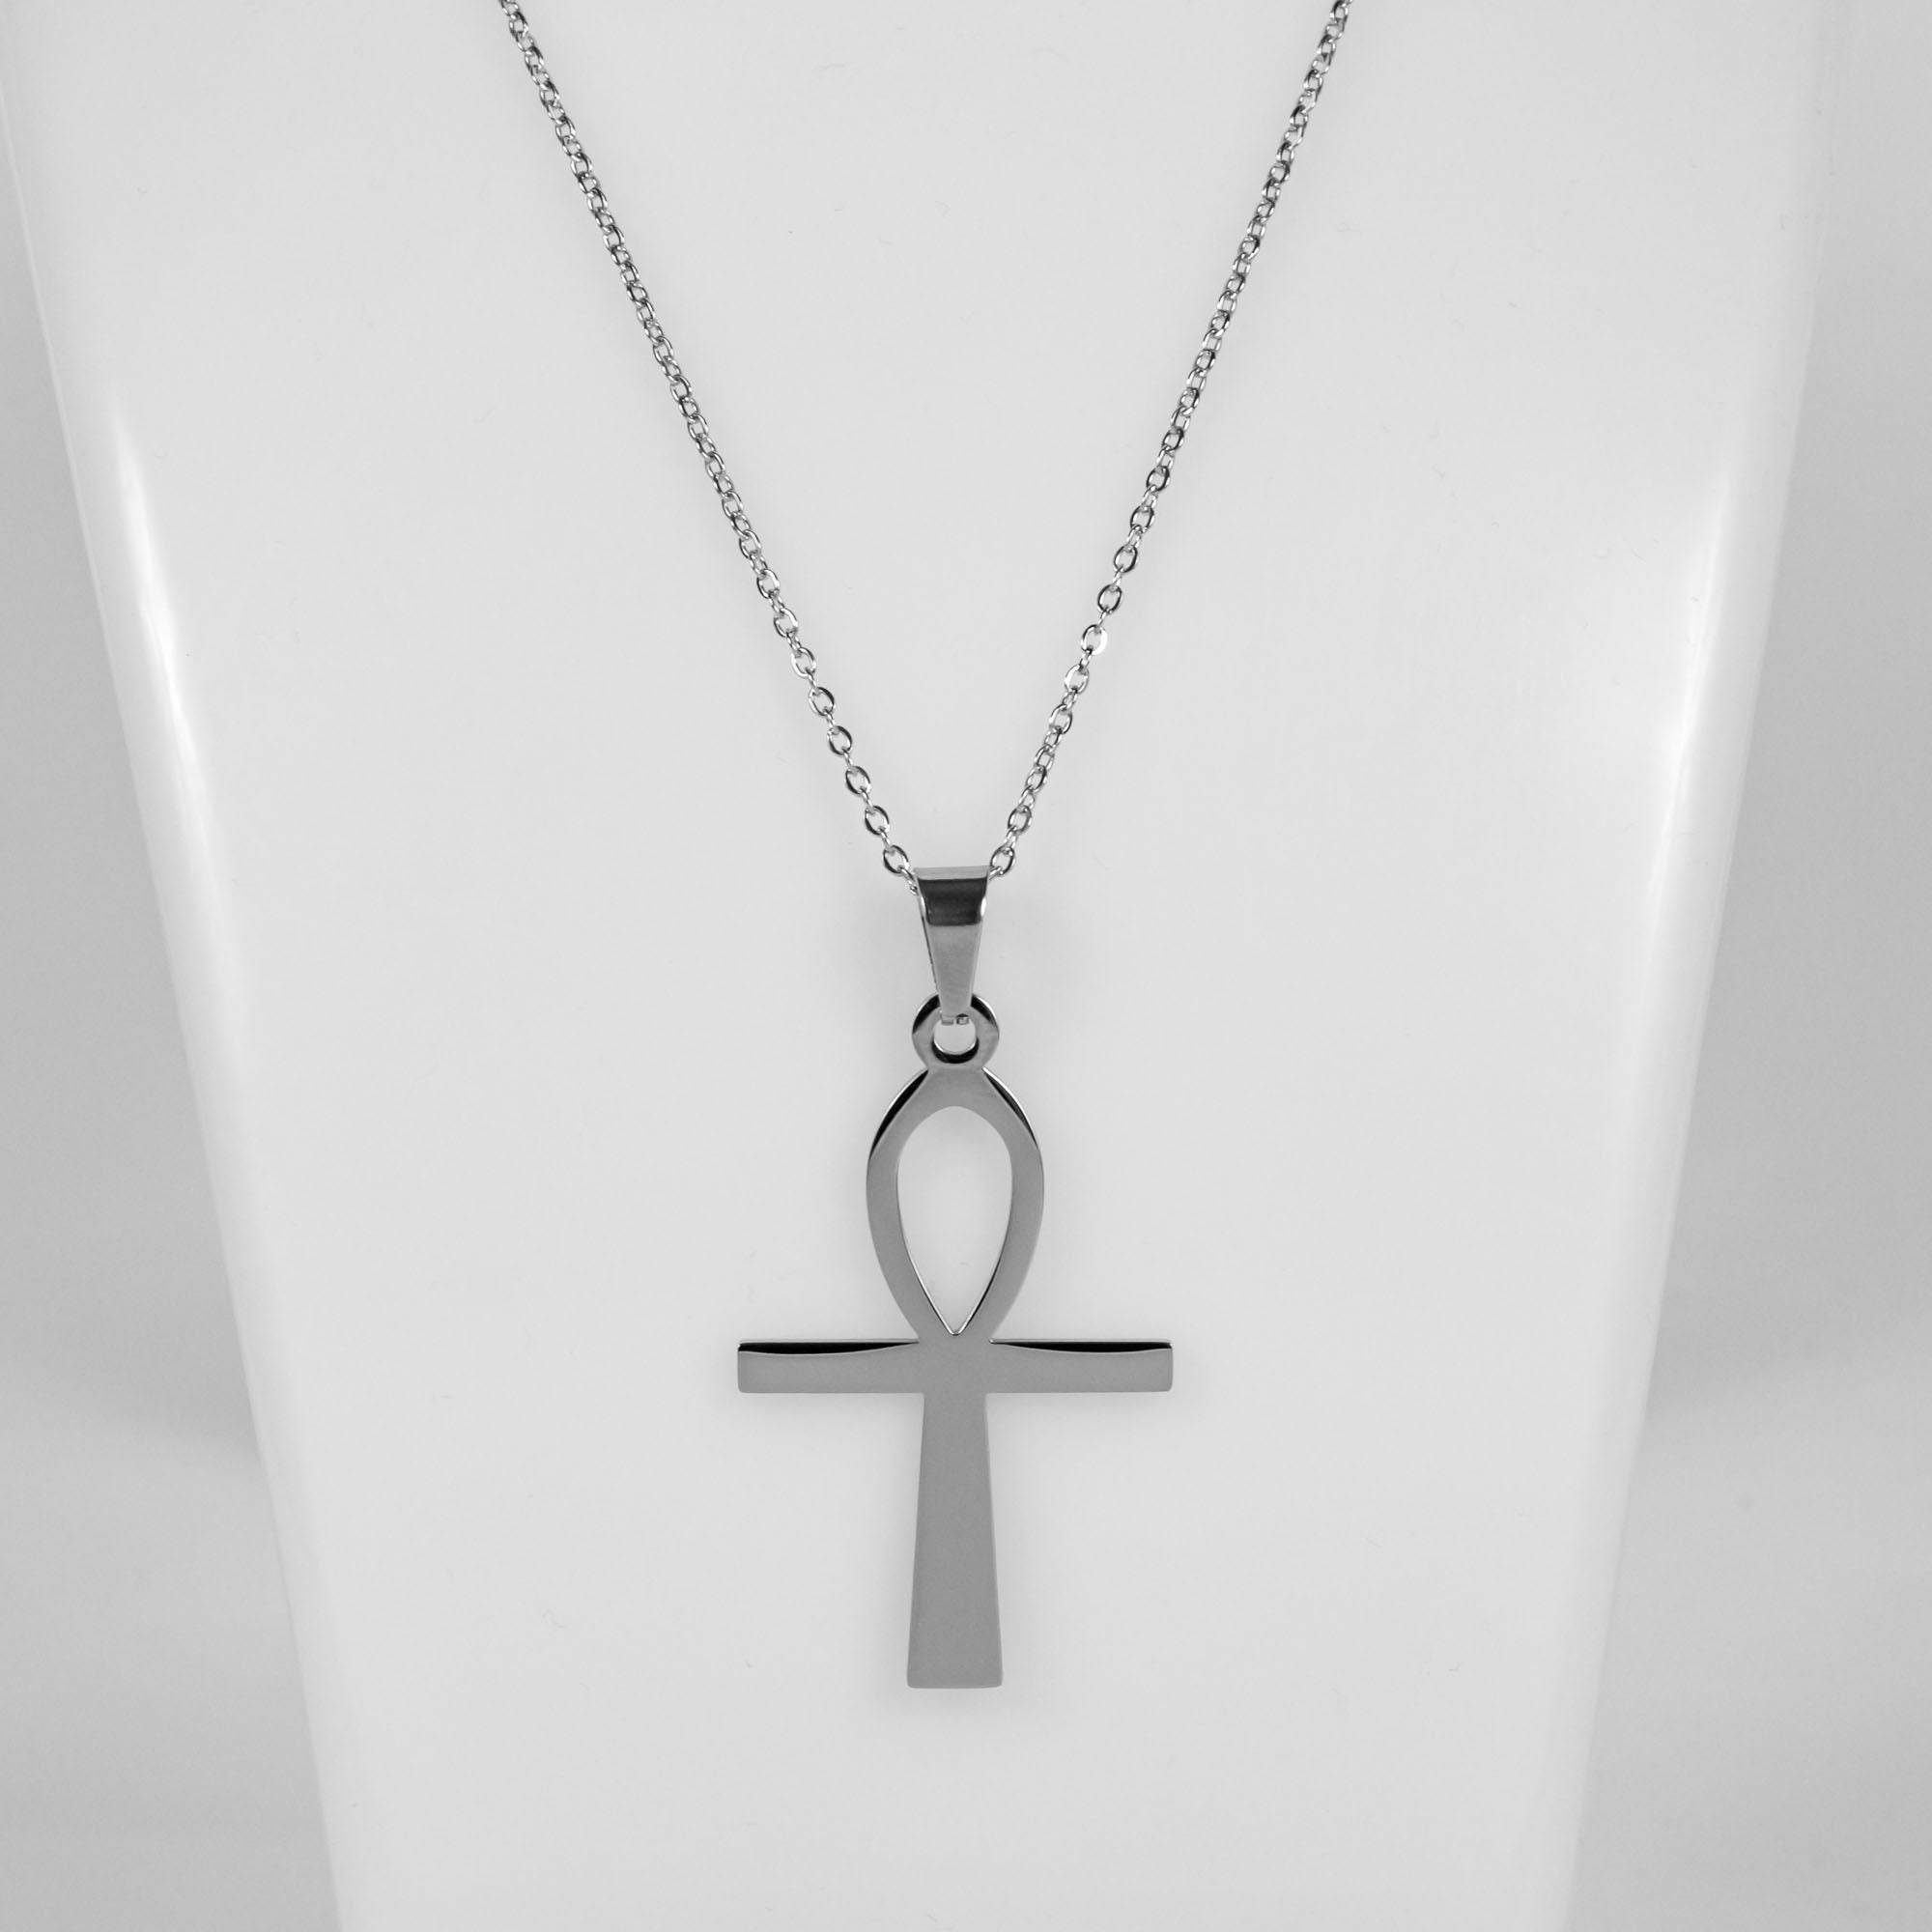 Wholesale 10Pcs 44.5mm Silver Ankh Cross Gothic Steel Pendant Chain Necklace